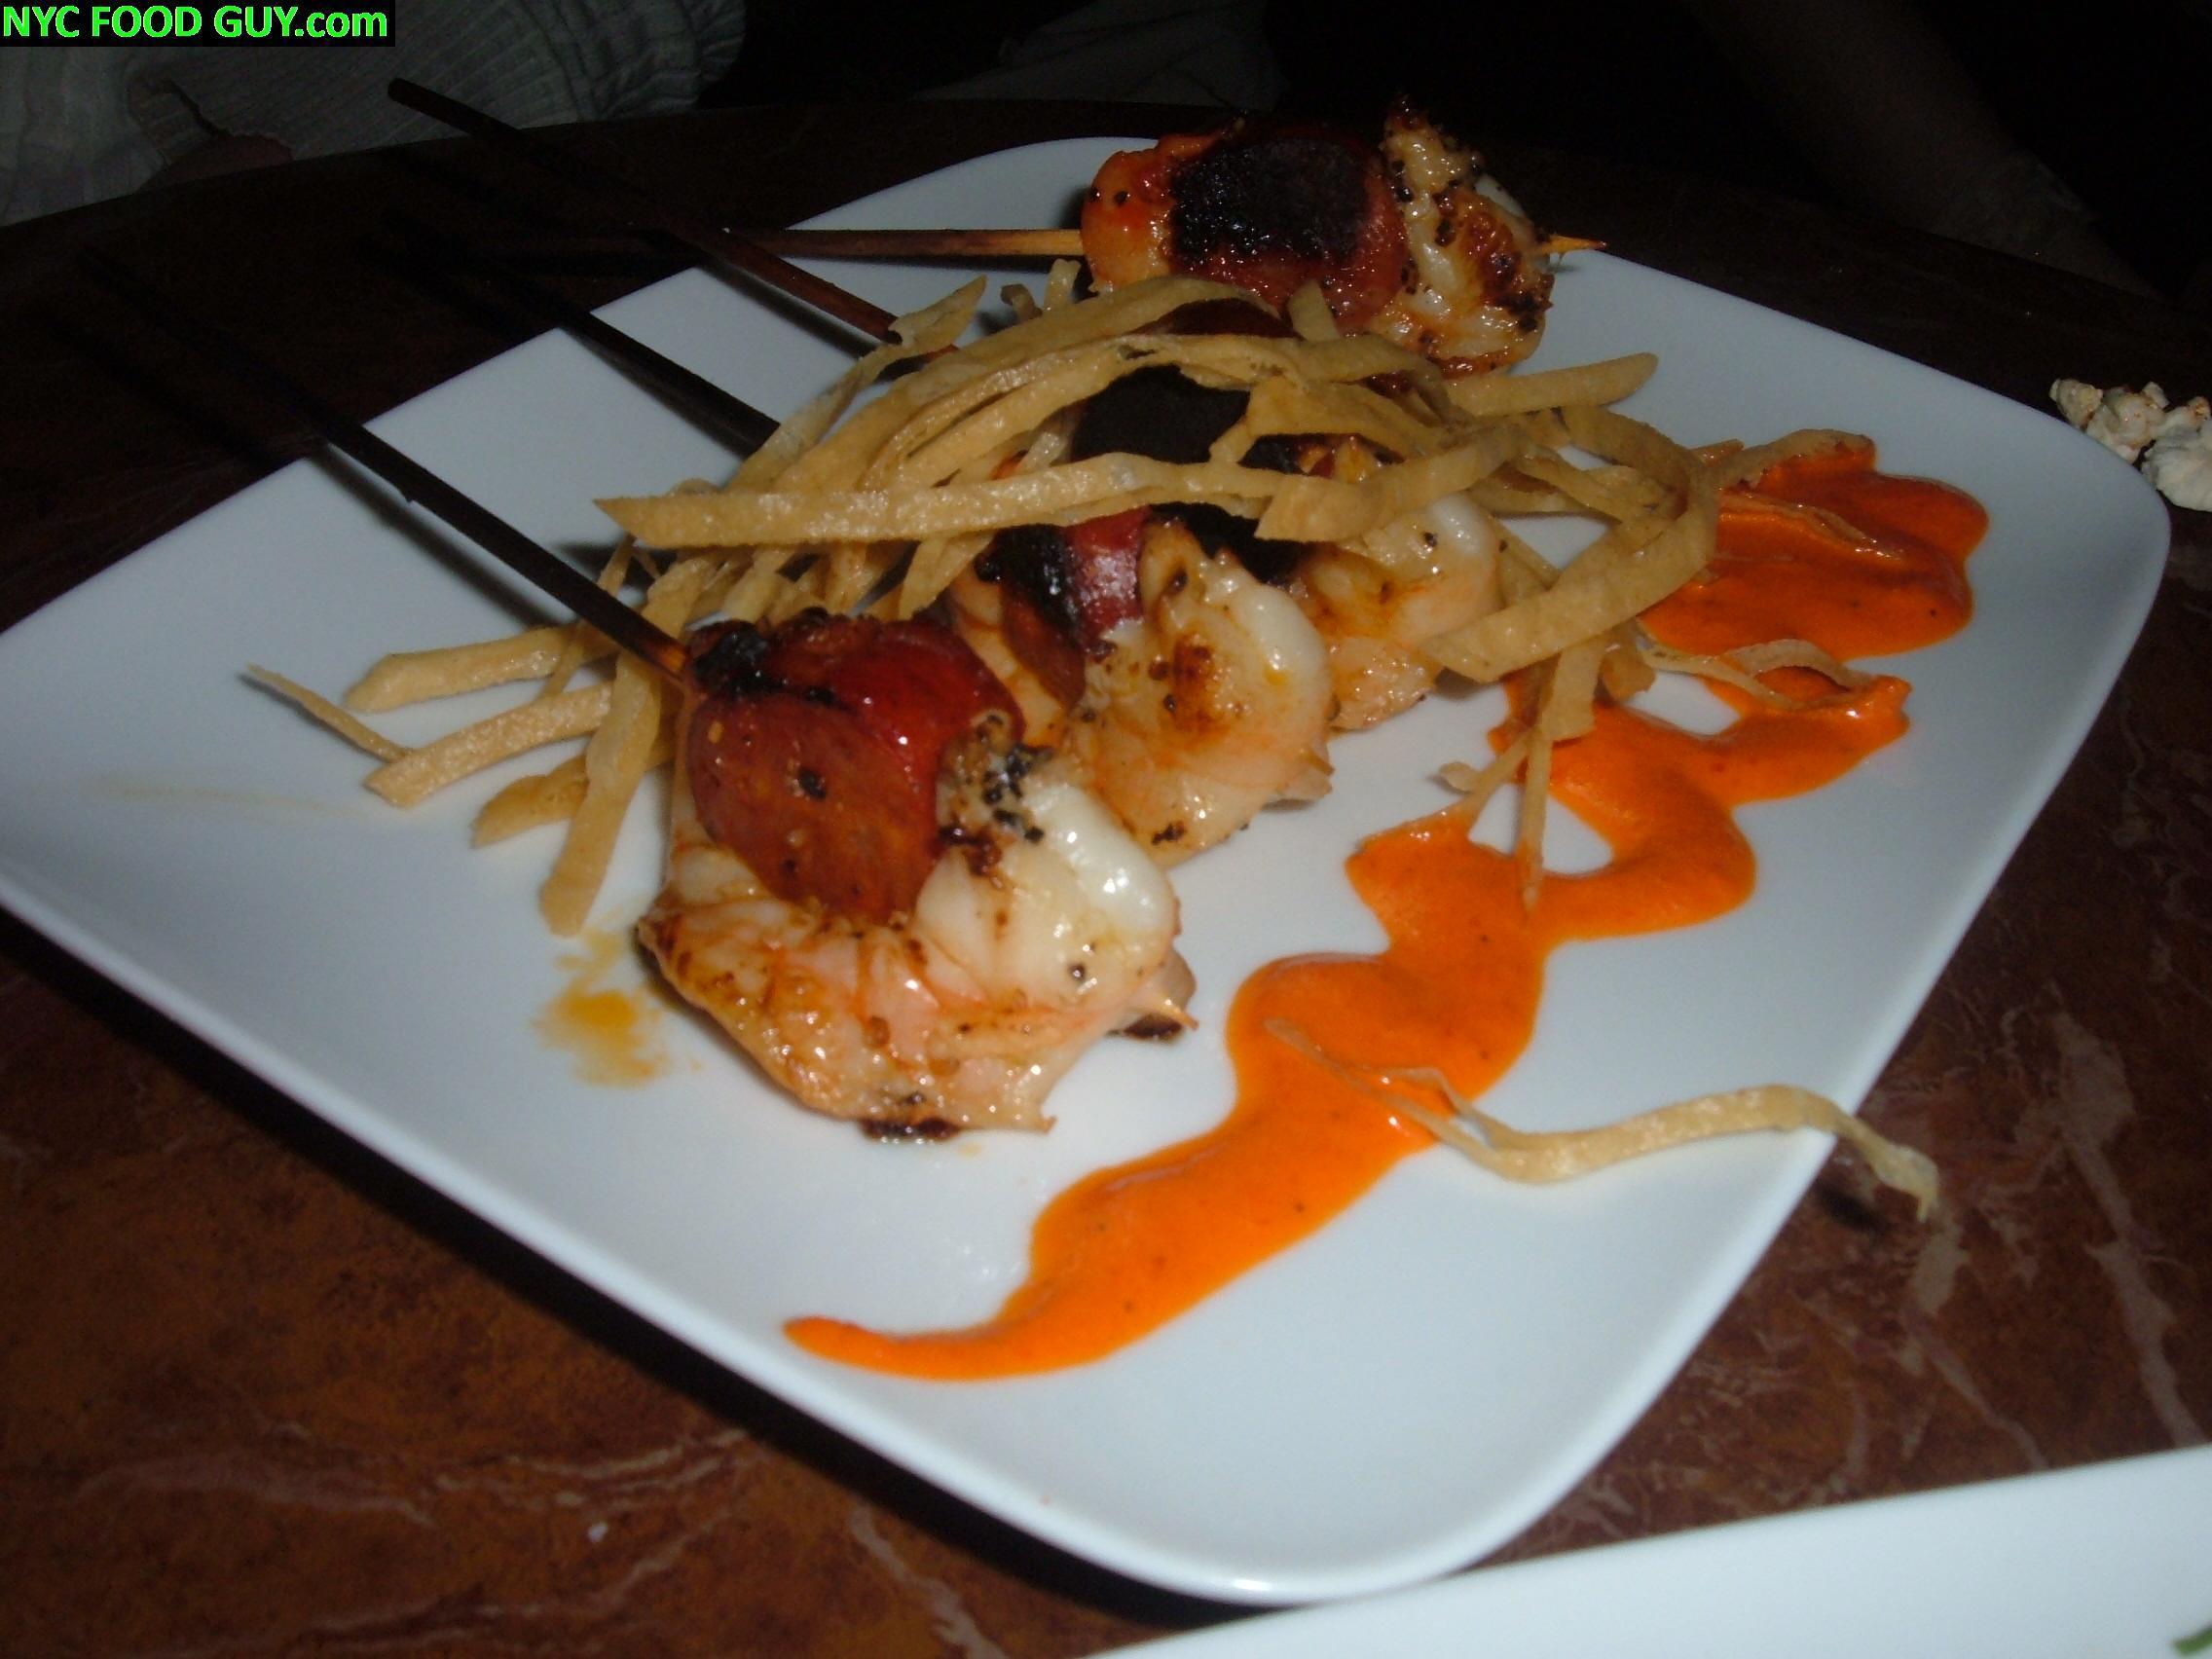 Shrimp & chorizo, a beautiful union.